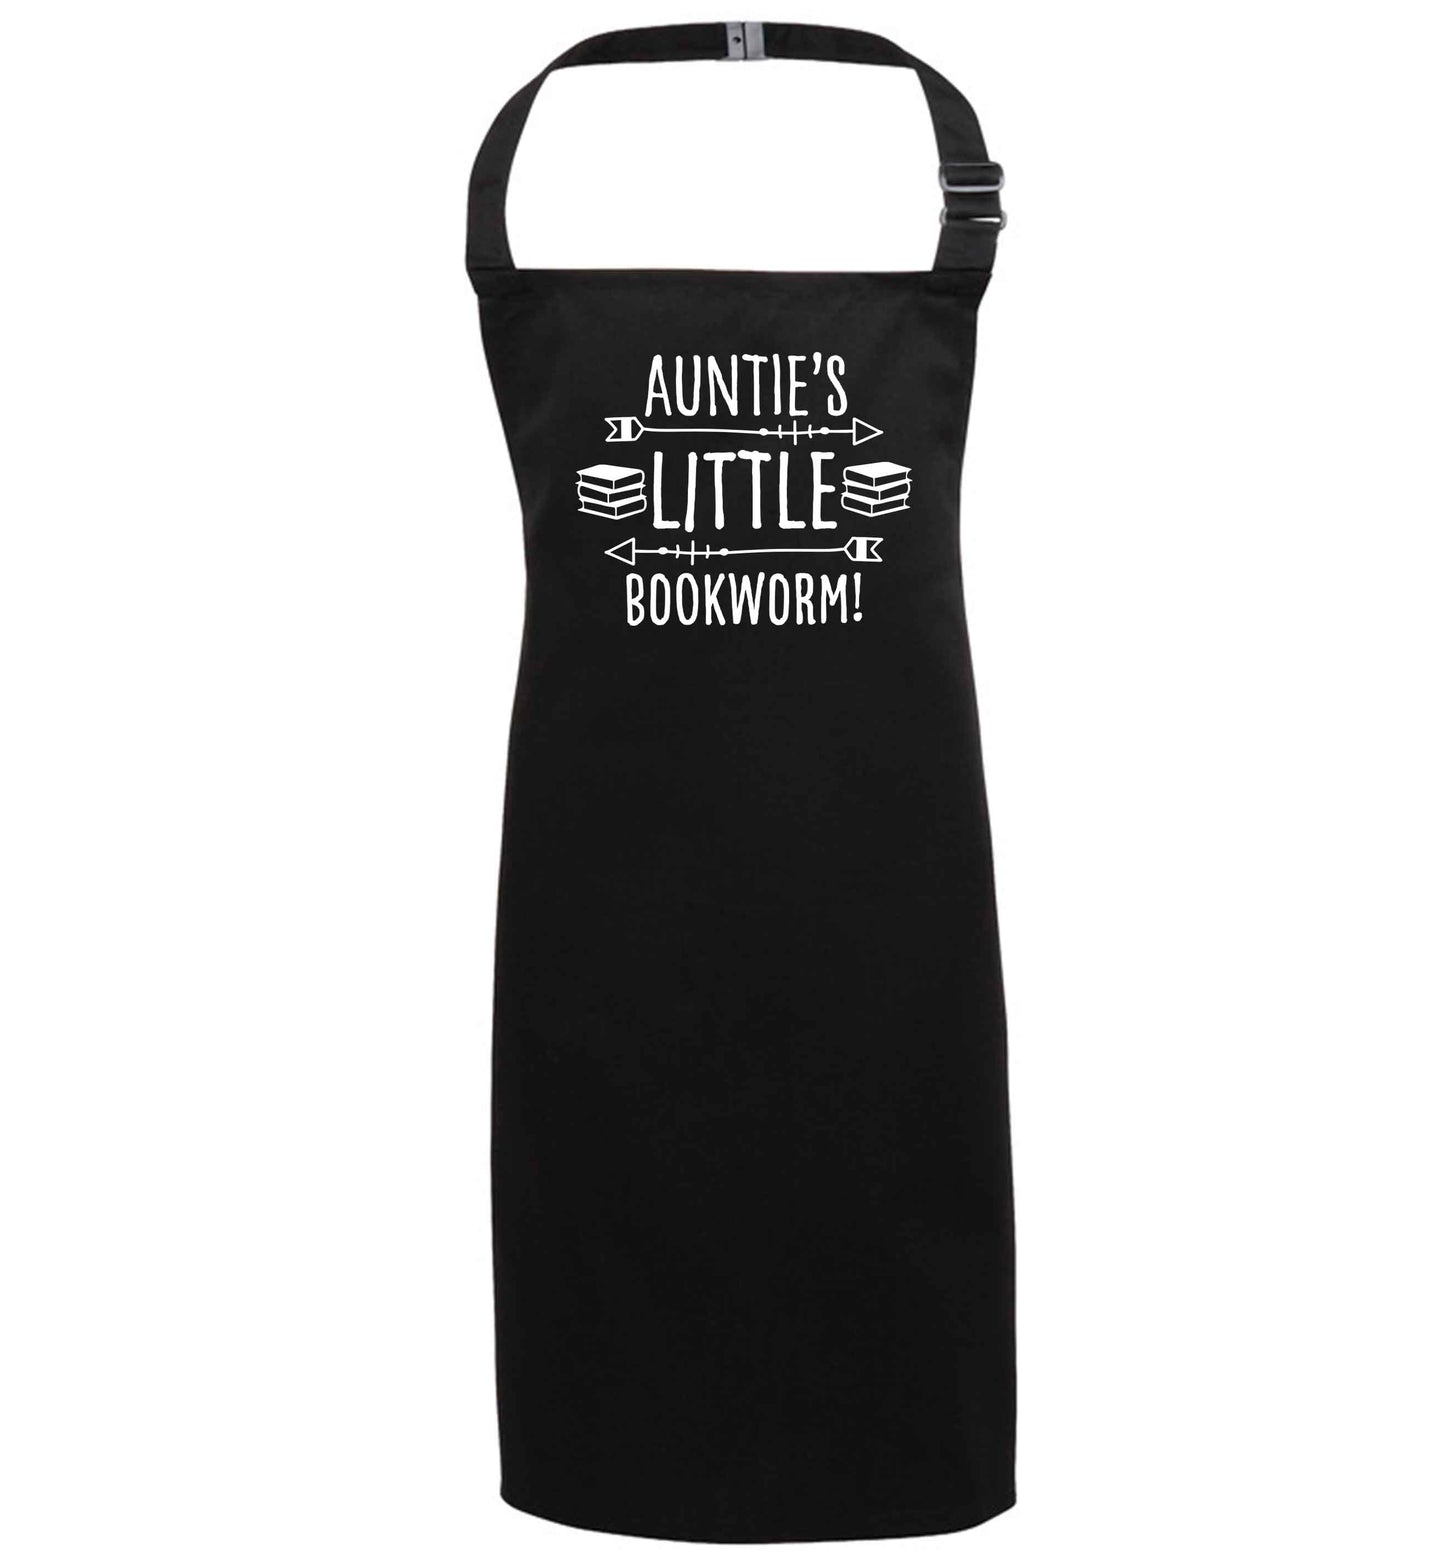 Auntie's little bookworm black apron 7-10 years